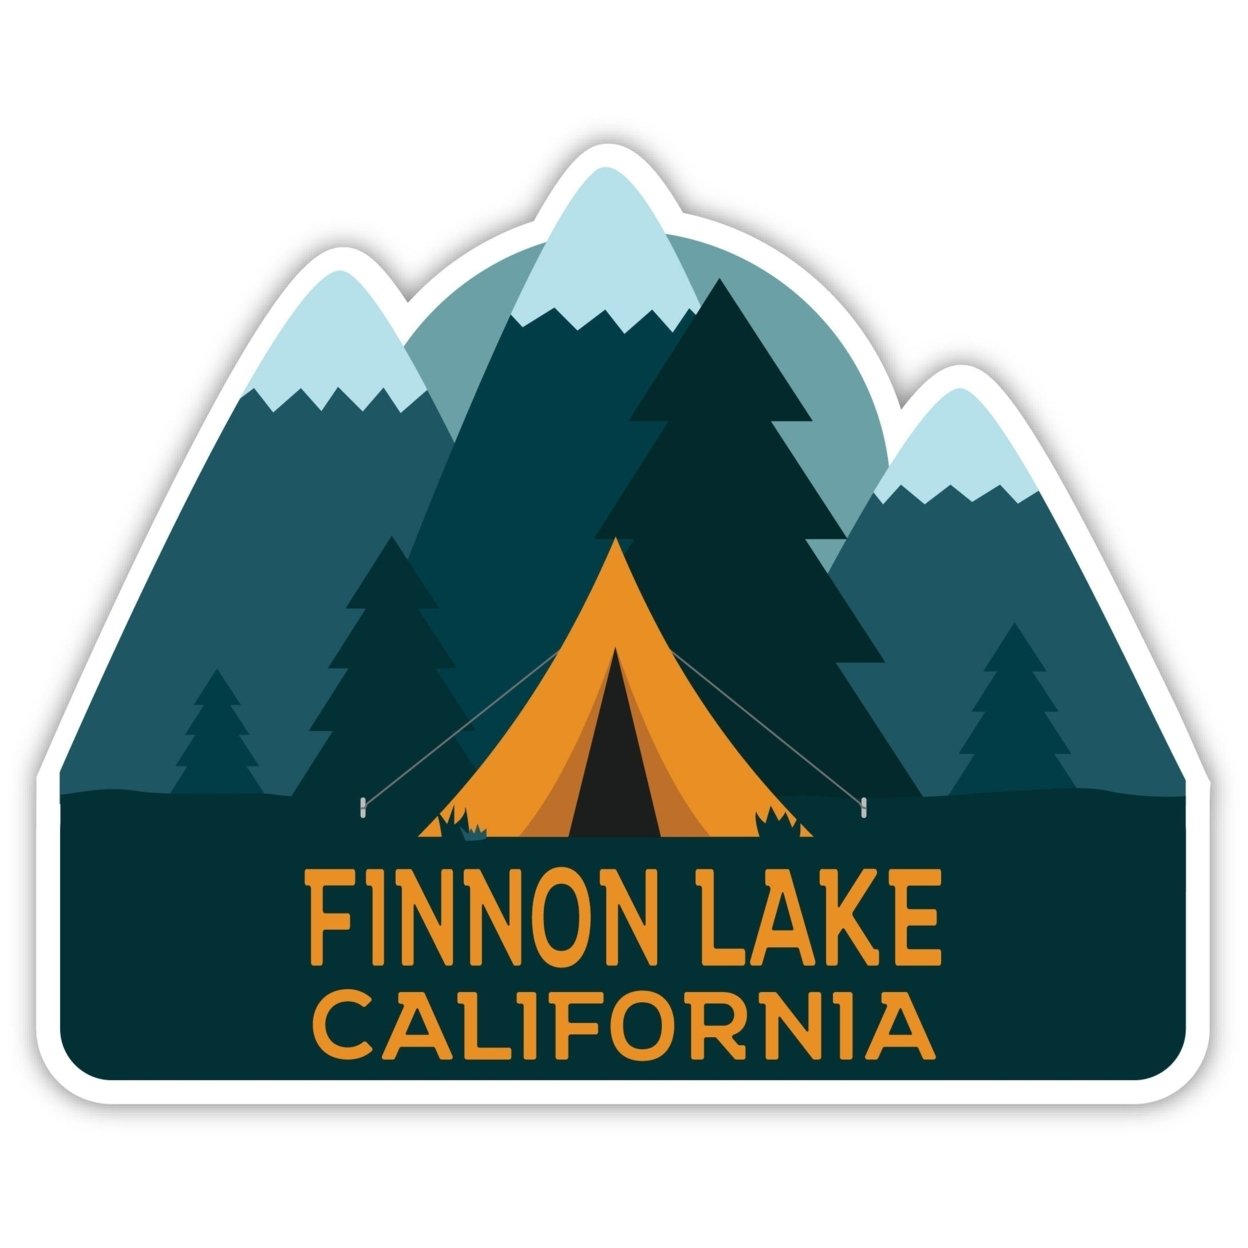 Finnon Lake California Souvenir Decorative Stickers (Choose Theme And Size) - 4-Pack, 4-Inch, Tent